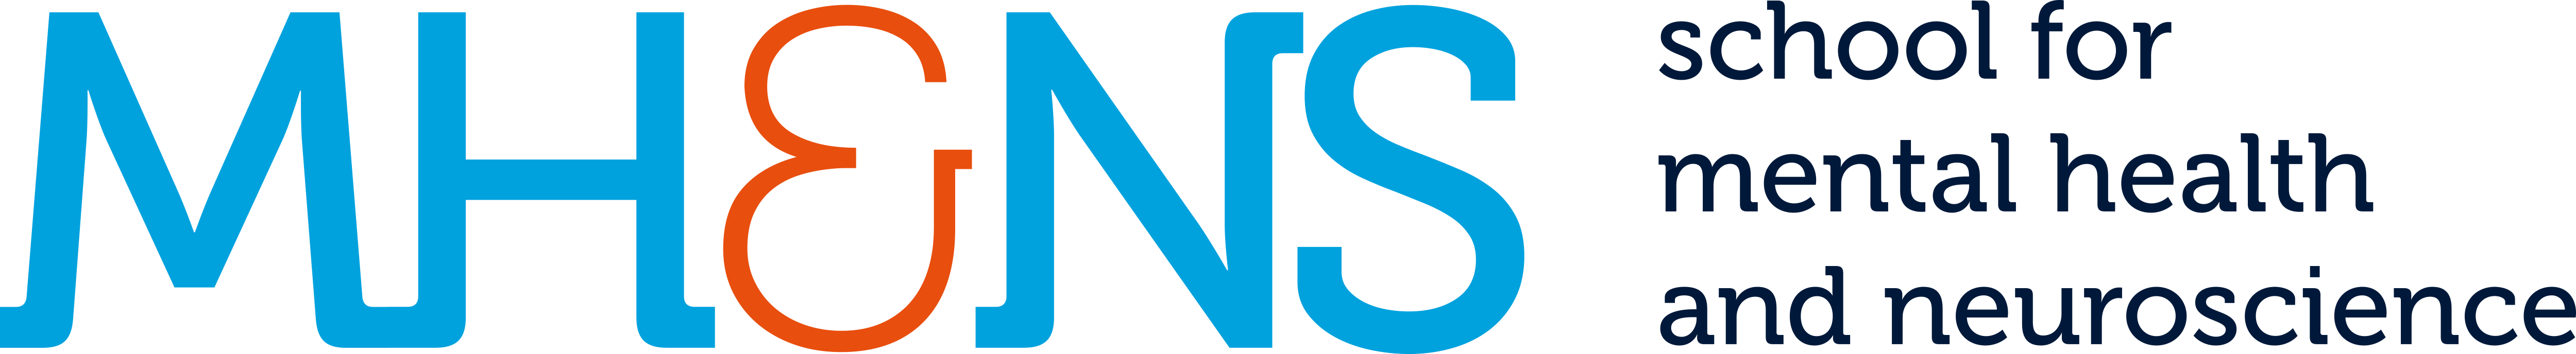 logo MHENS